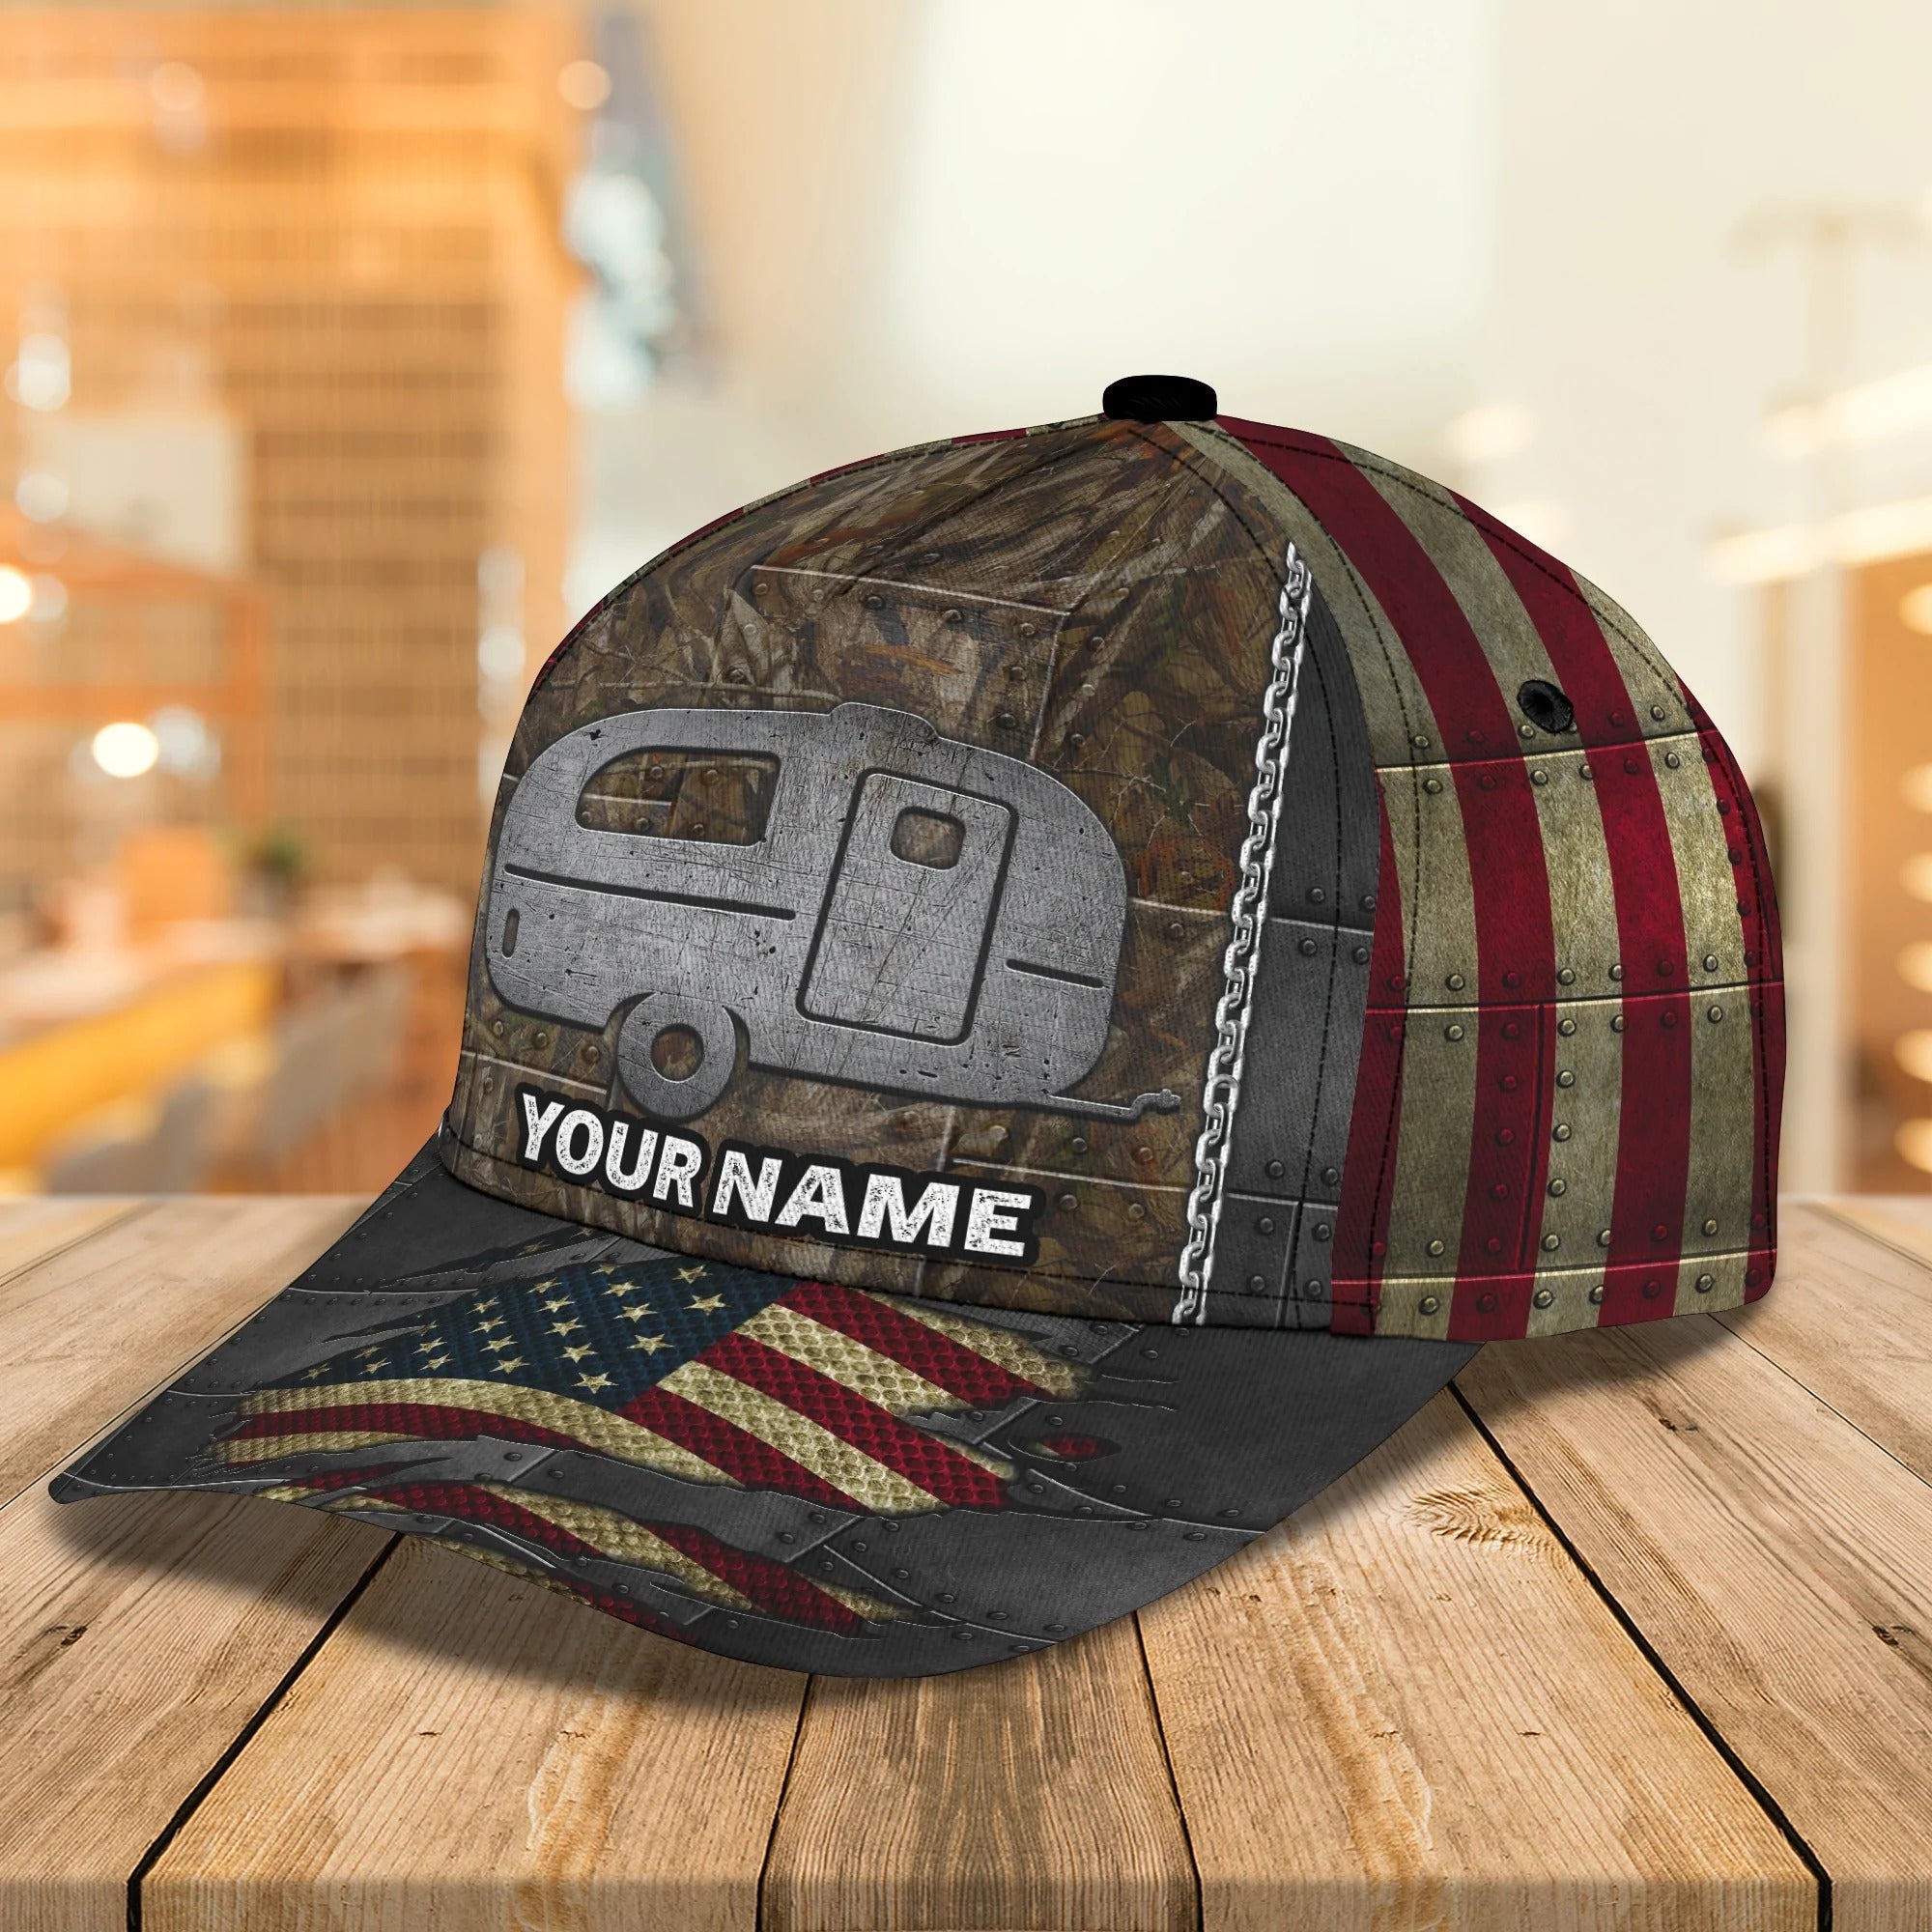 Customized 3D Full Printed Camping Caravan Cap Hat/ Baseball Camping Cap Hat/ Camp Cap Hat